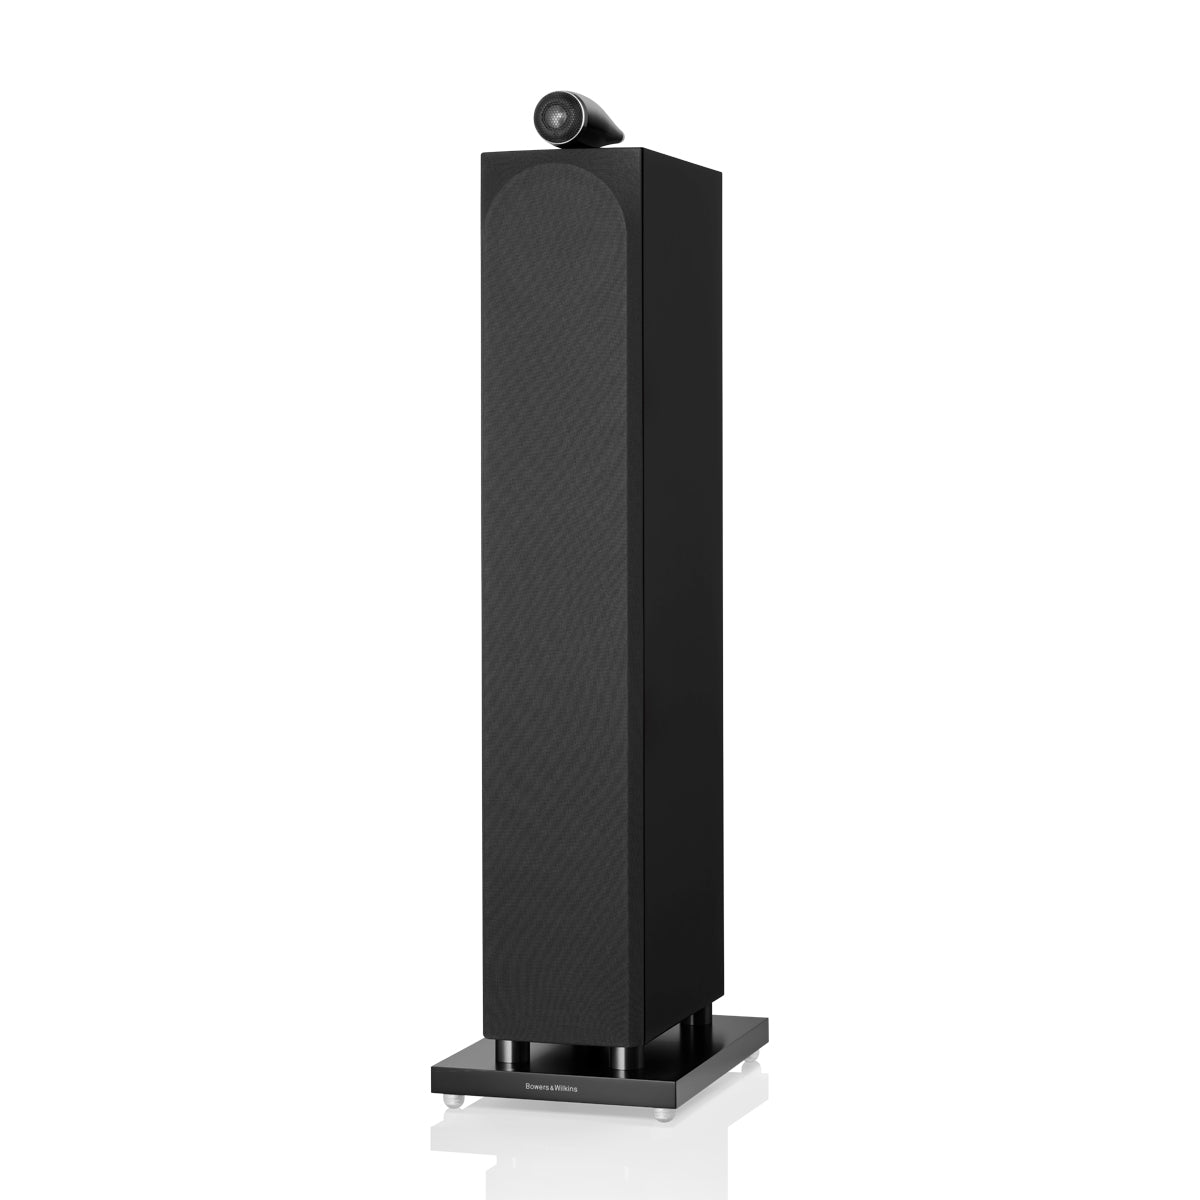 Bowers & Wilkins 702 S3 3-Way Floor Standing Speakers - Gloss Black - The Audio Experts